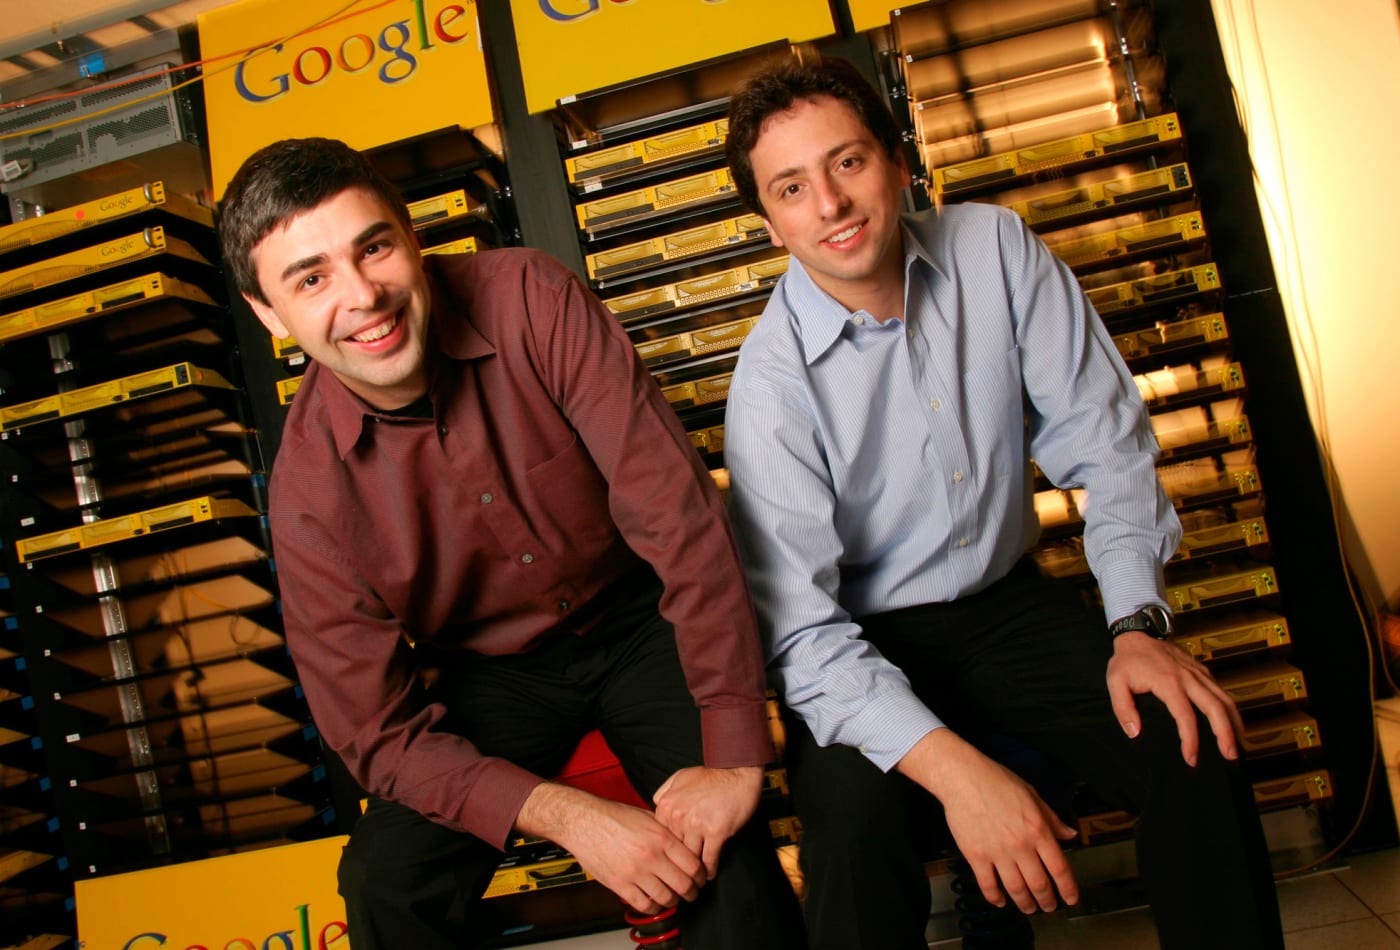 Google Virtual Tour Of Larry Sergey Brin S Garage Office